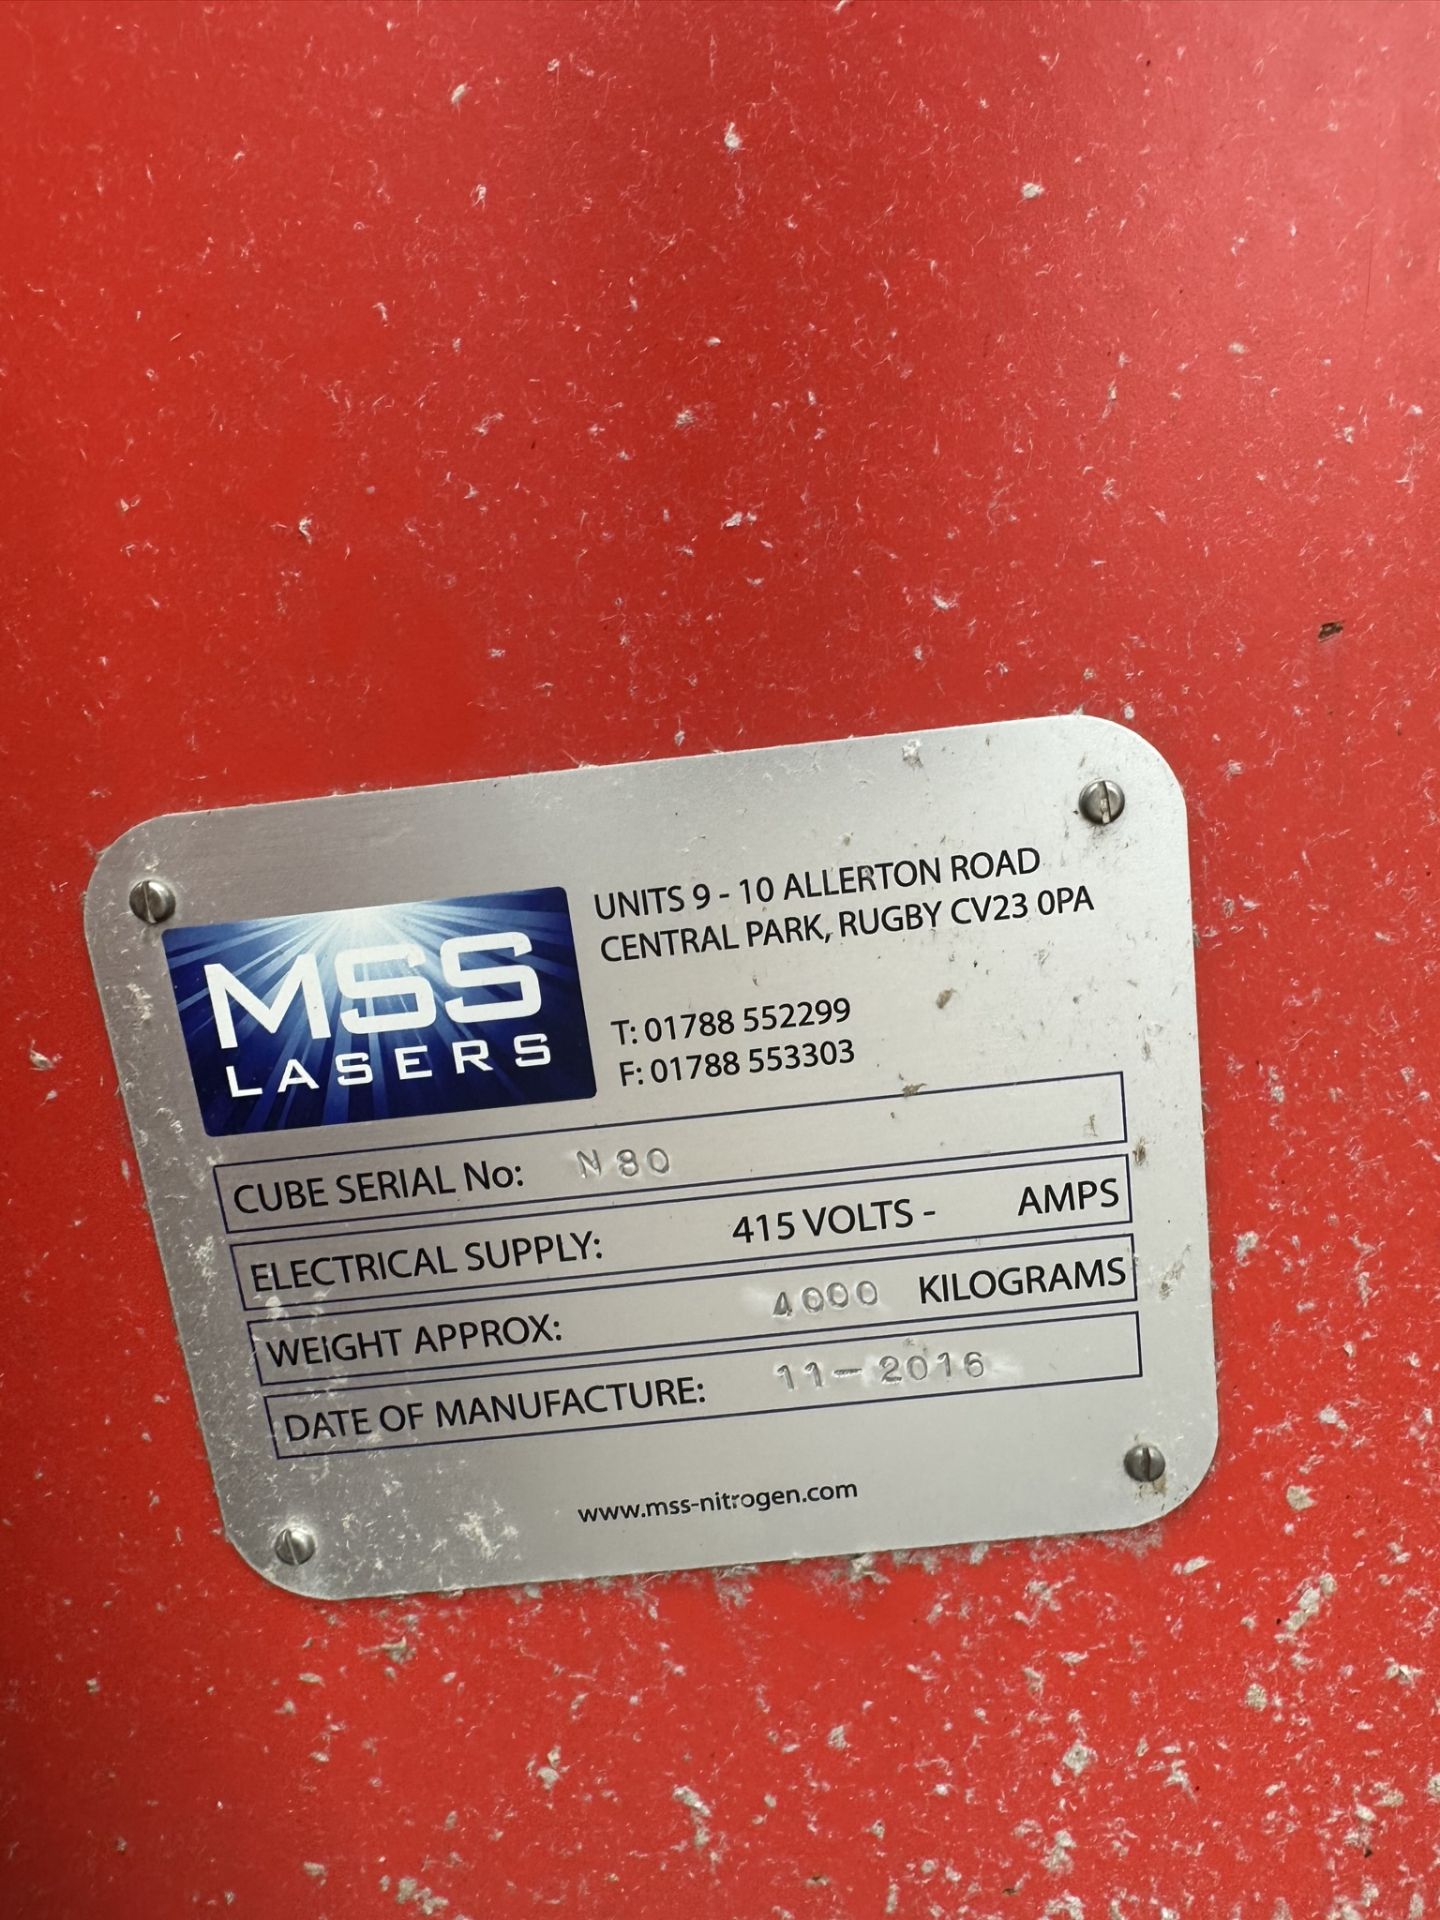 MSS Nitrogen Generation Equipment 2016 and MSS Generator - Image 3 of 7